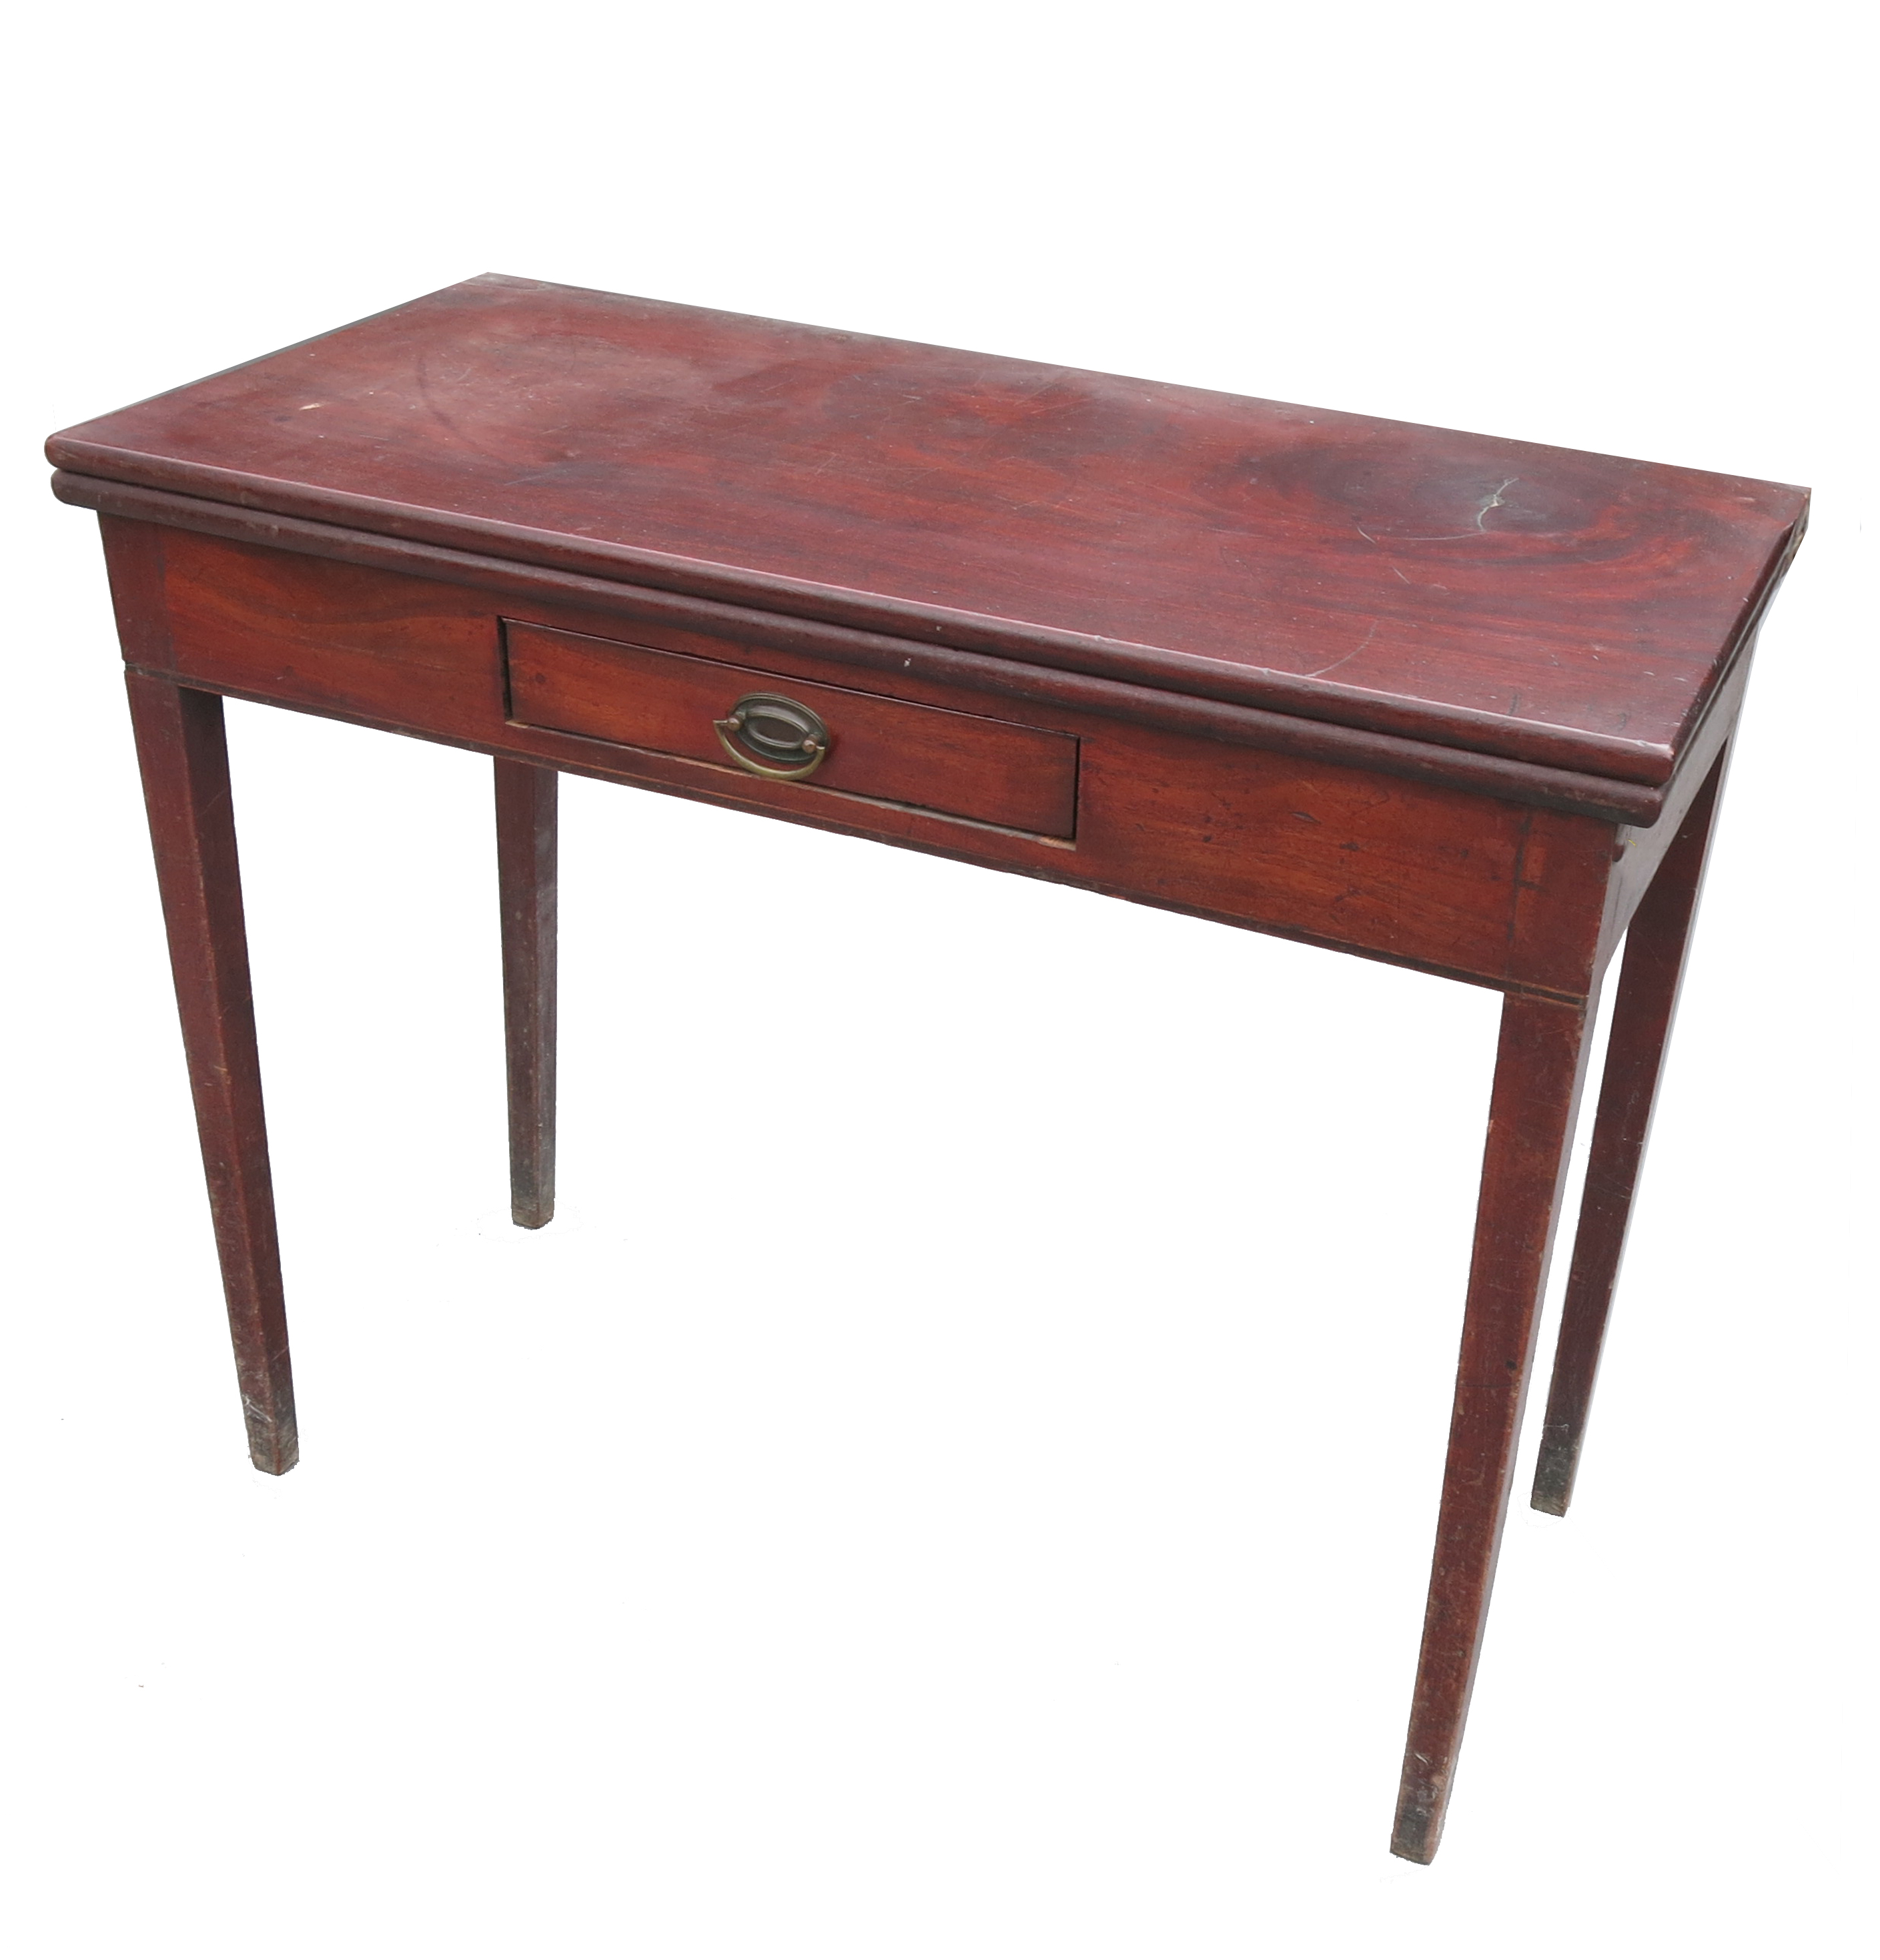 A Georgian mahogany rectangular fold over tea table, raised on square tapering legs,